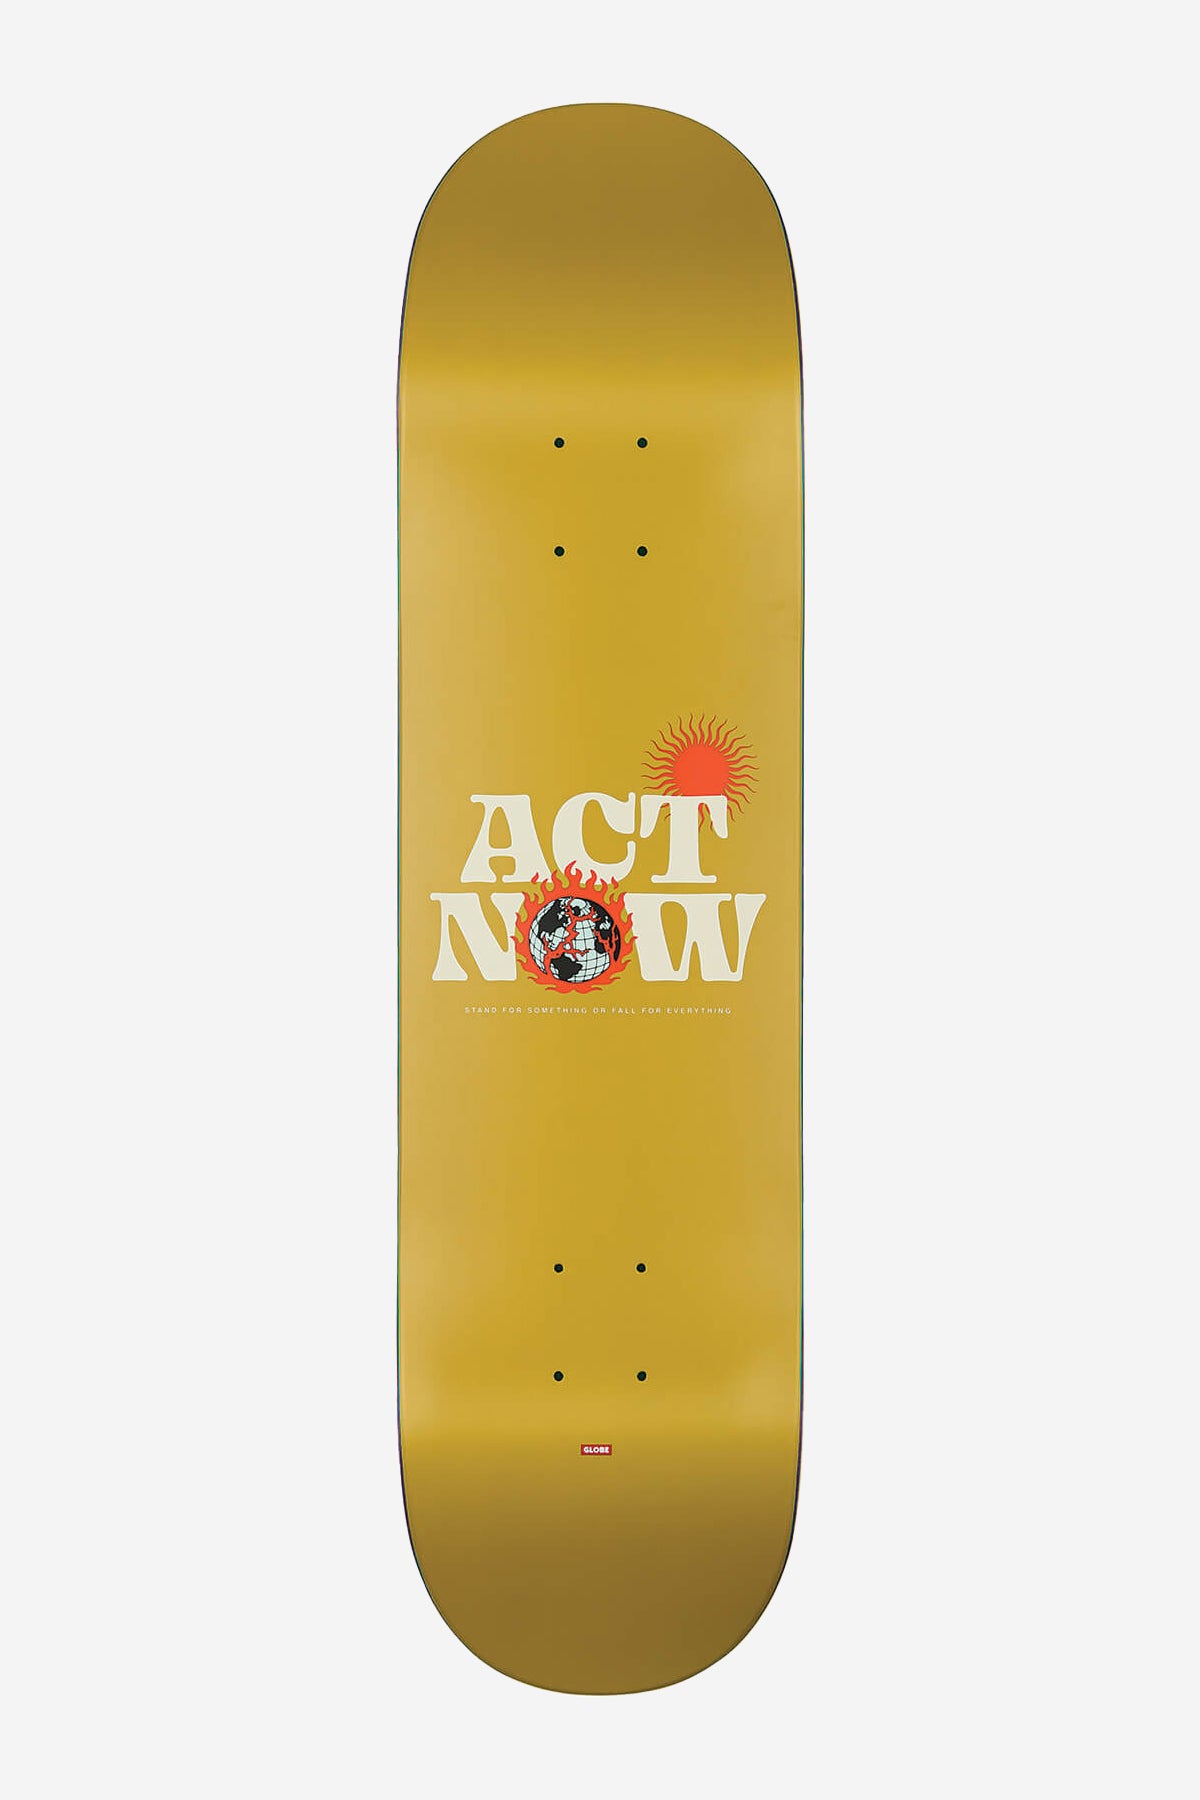 Globe - G1 Act Now - Mustard - 8.0" Skateboard Deck